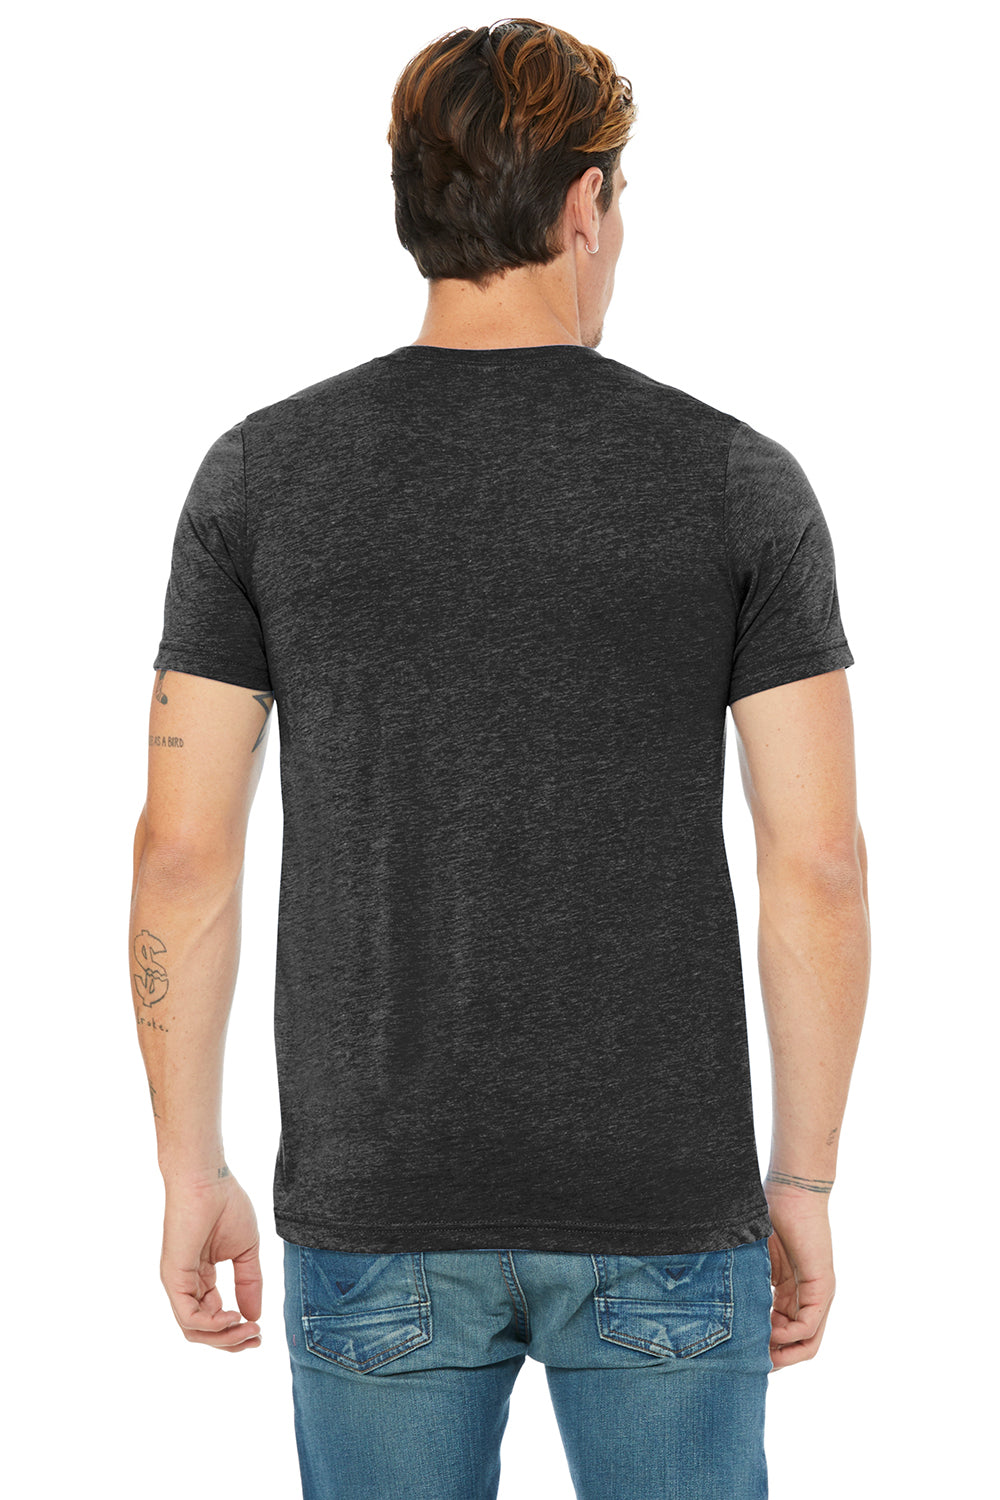 Bella + Canvas BC3415/3415C/3415 Mens Short Sleeve V-Neck T-Shirt Charcoal Black Model Back